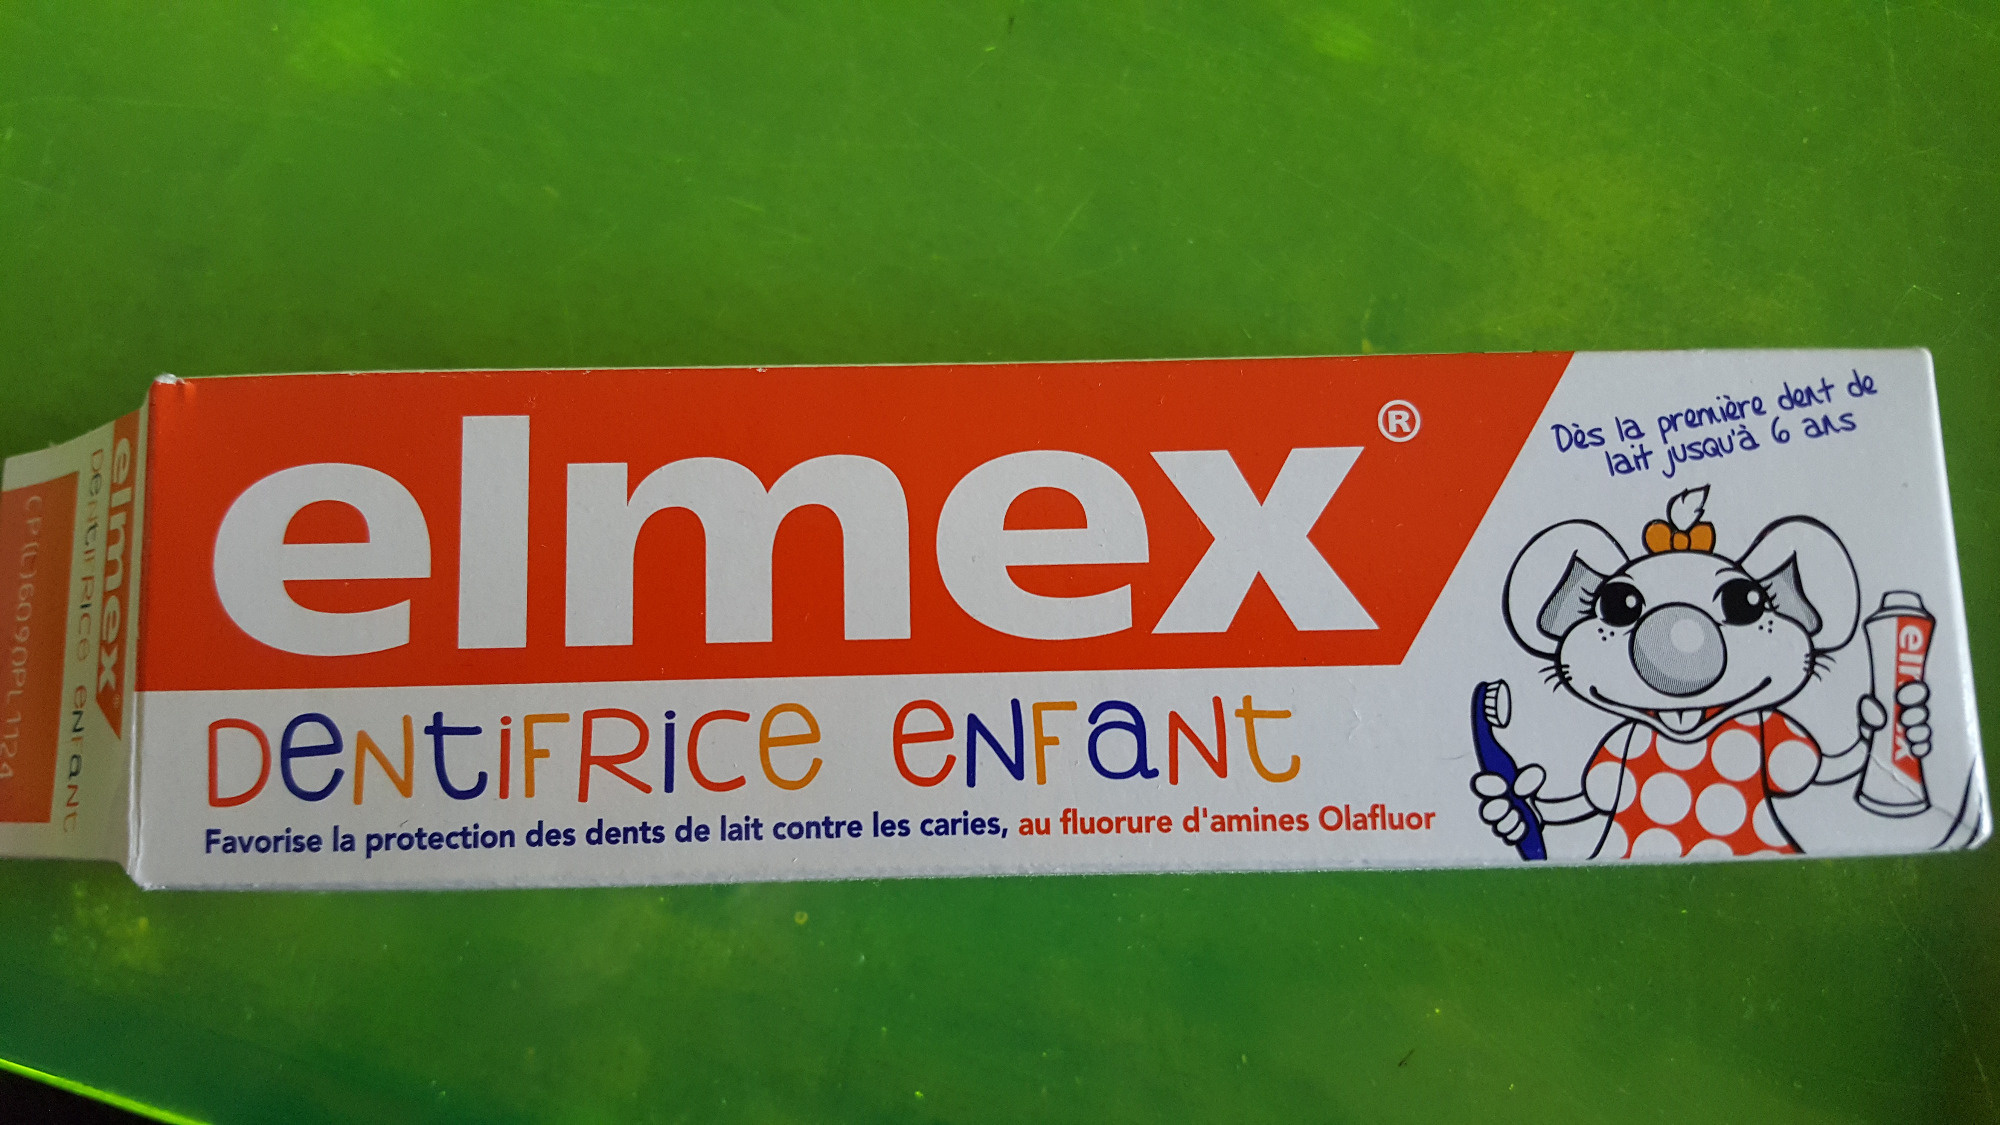 Dentifrice enfant Elmex - Product - fr